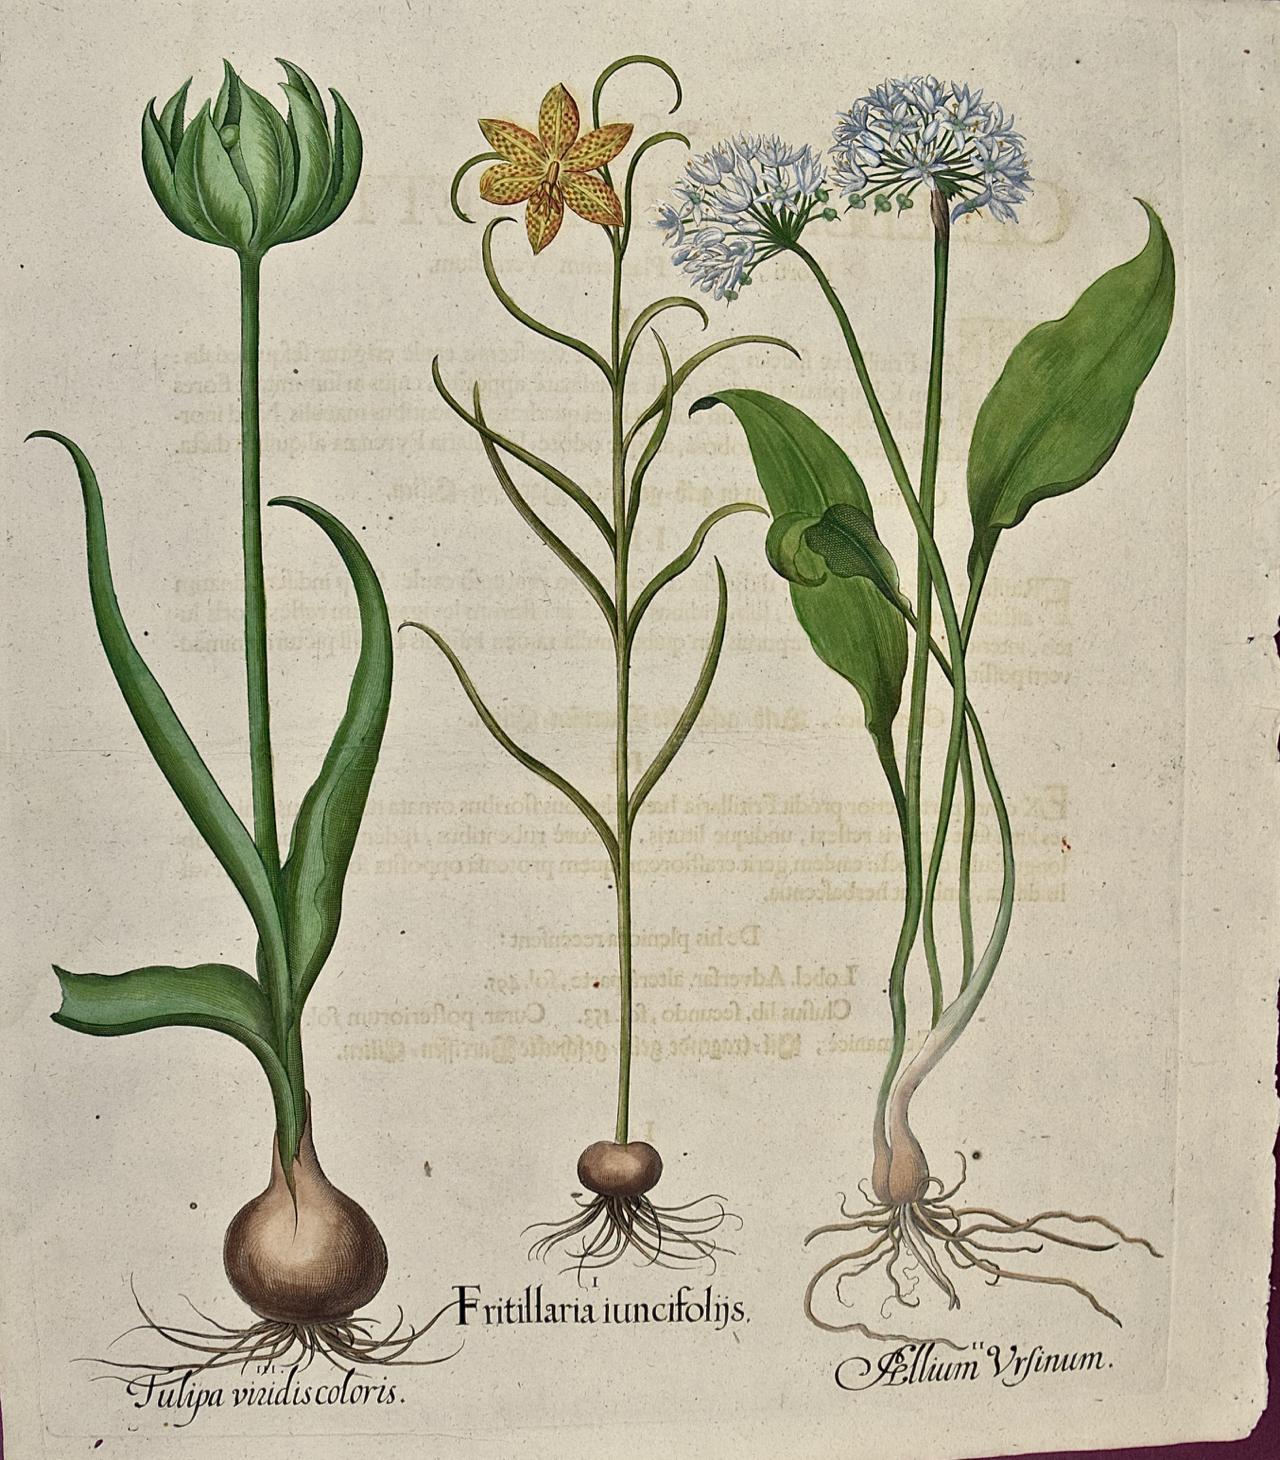 Besler Hand-colored Botanical Engraving of Flowering Tulip & Wild Garlic Plants 